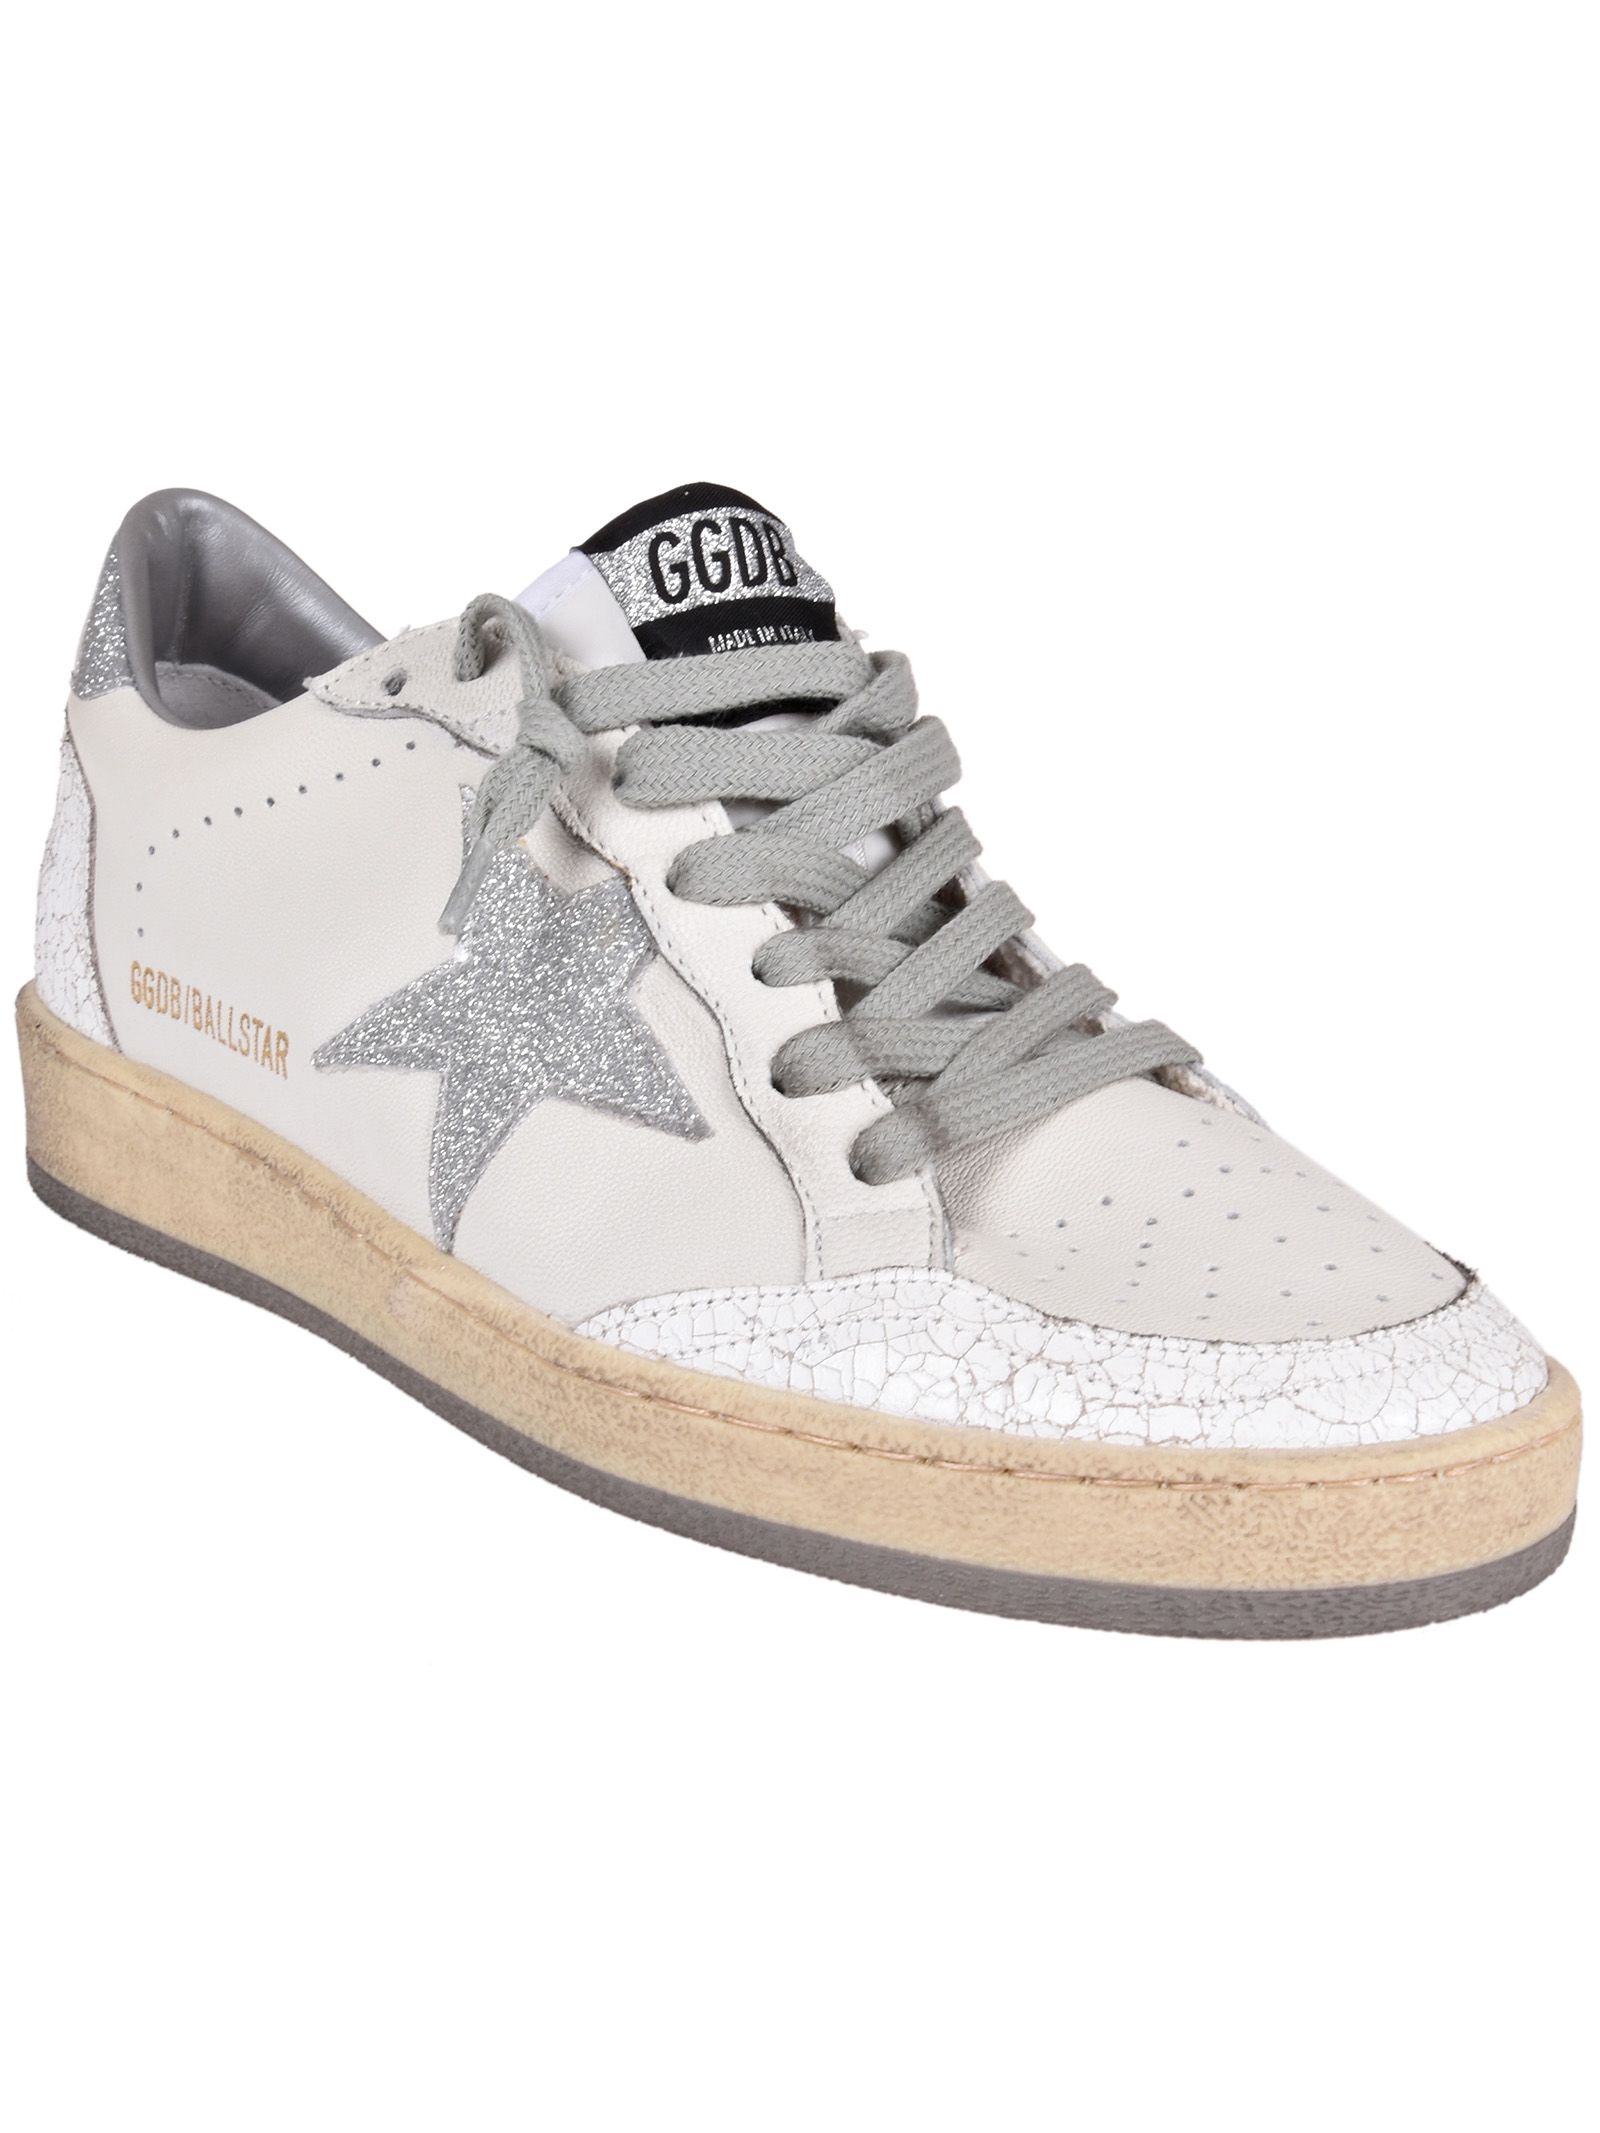 Golden Goose Ball Star Sneakers - White Leather/silver Glitter Star - 10626432 | italist